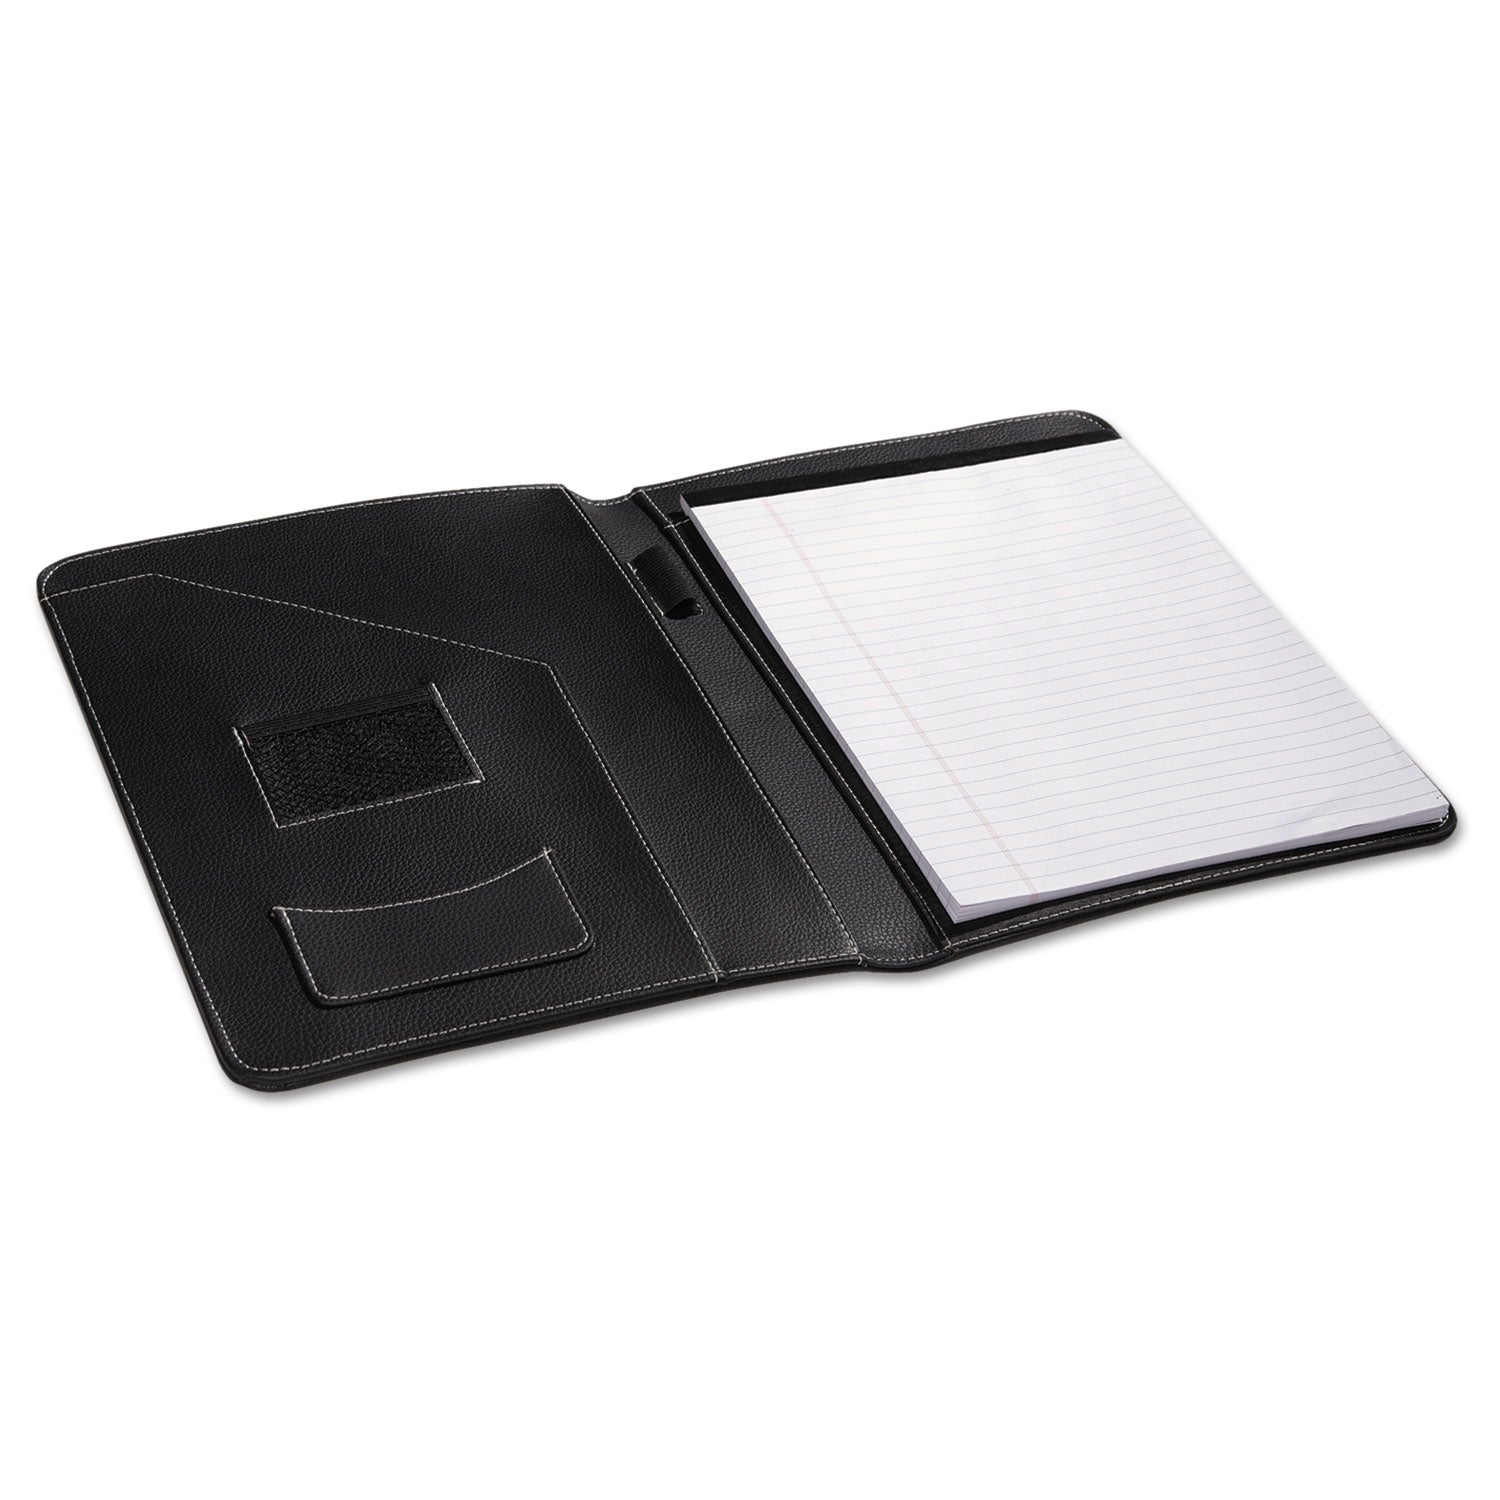 Leather-Look Pad Folio, Inside Flap Pocket w/Card Holder, Black - 